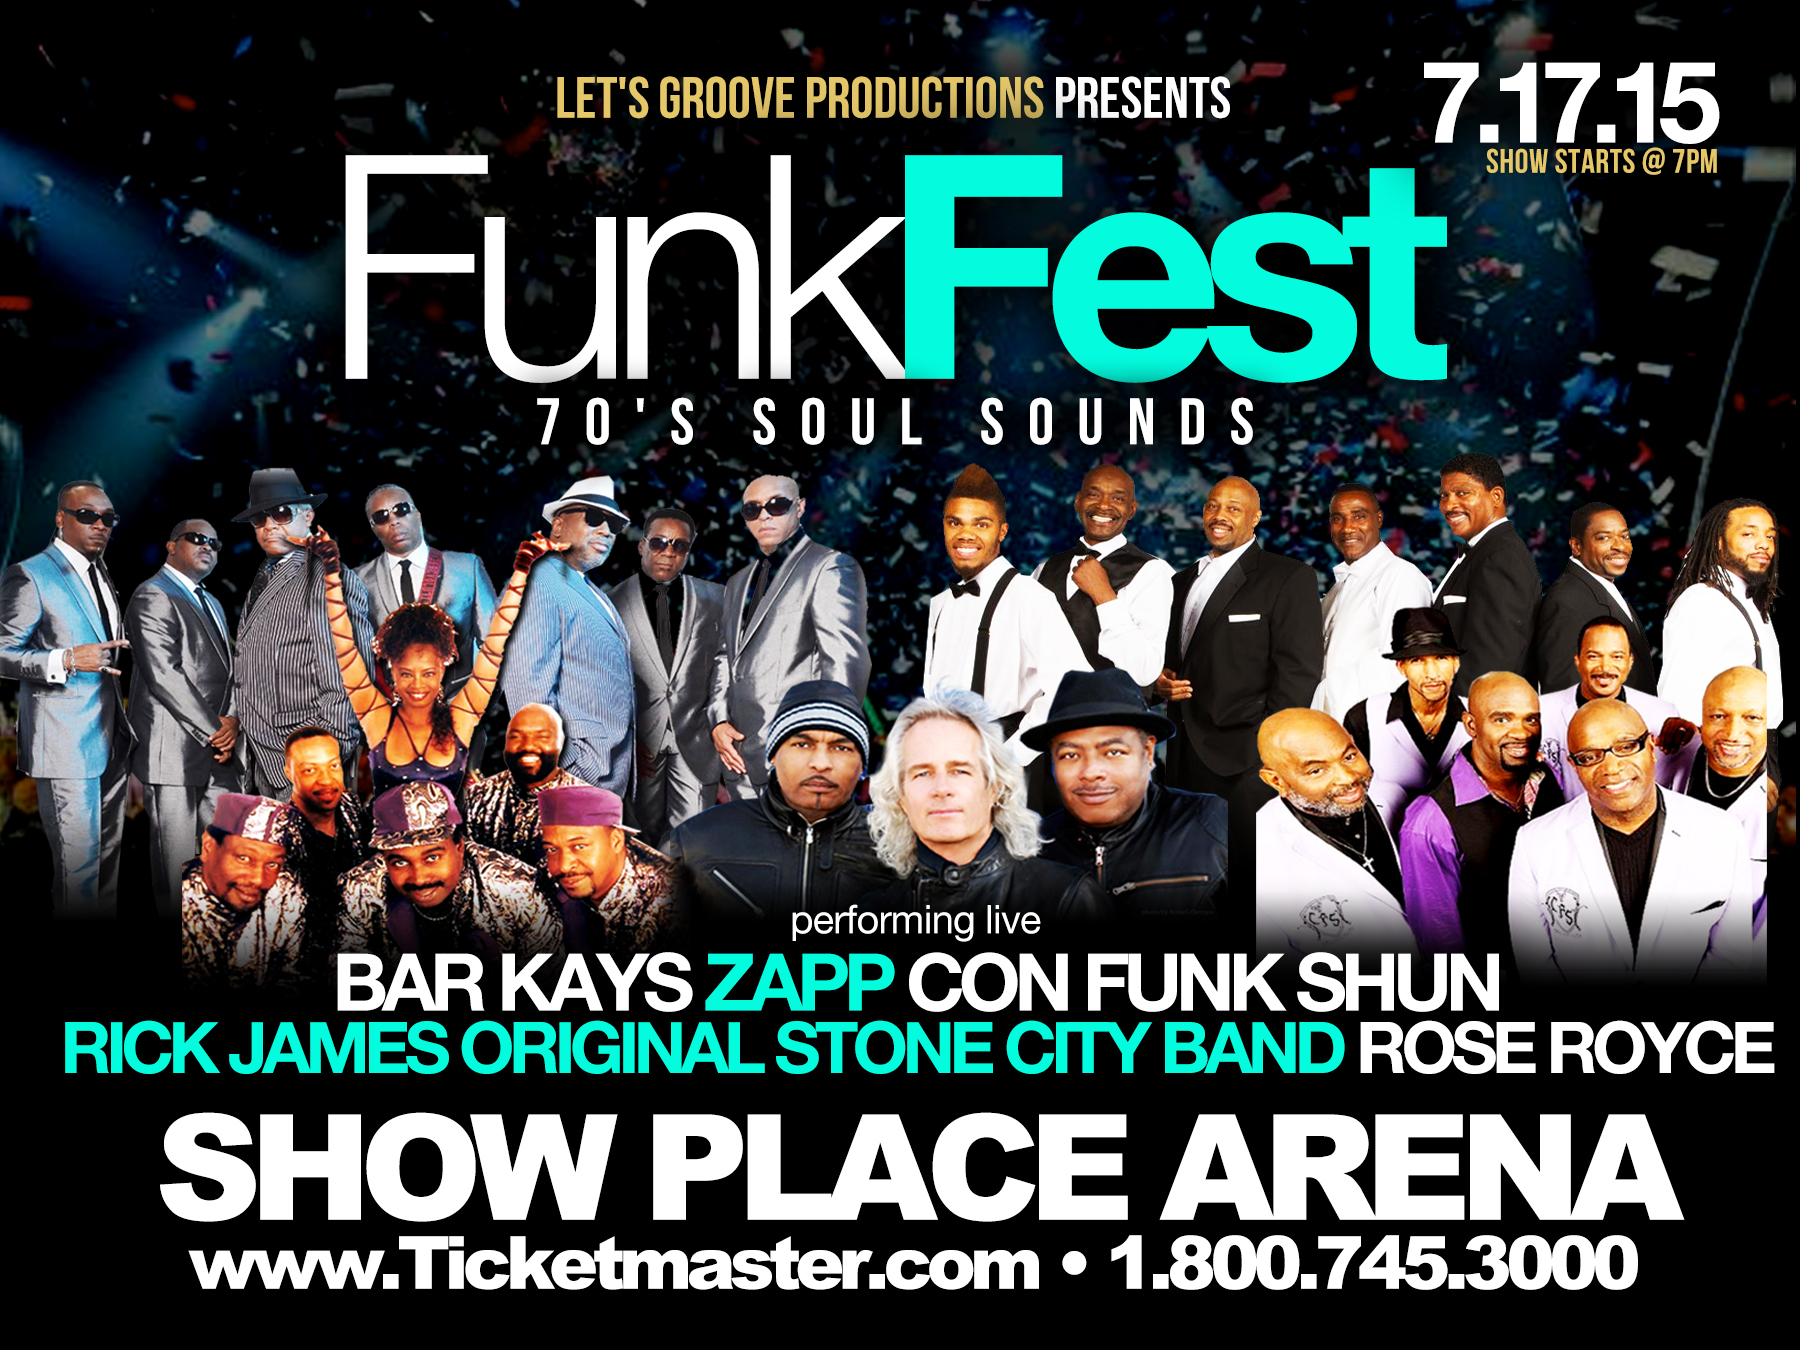 Funk Fest 70’s Soul Sound Showplace Arena (7/17/15) Majic 102.3 92.7